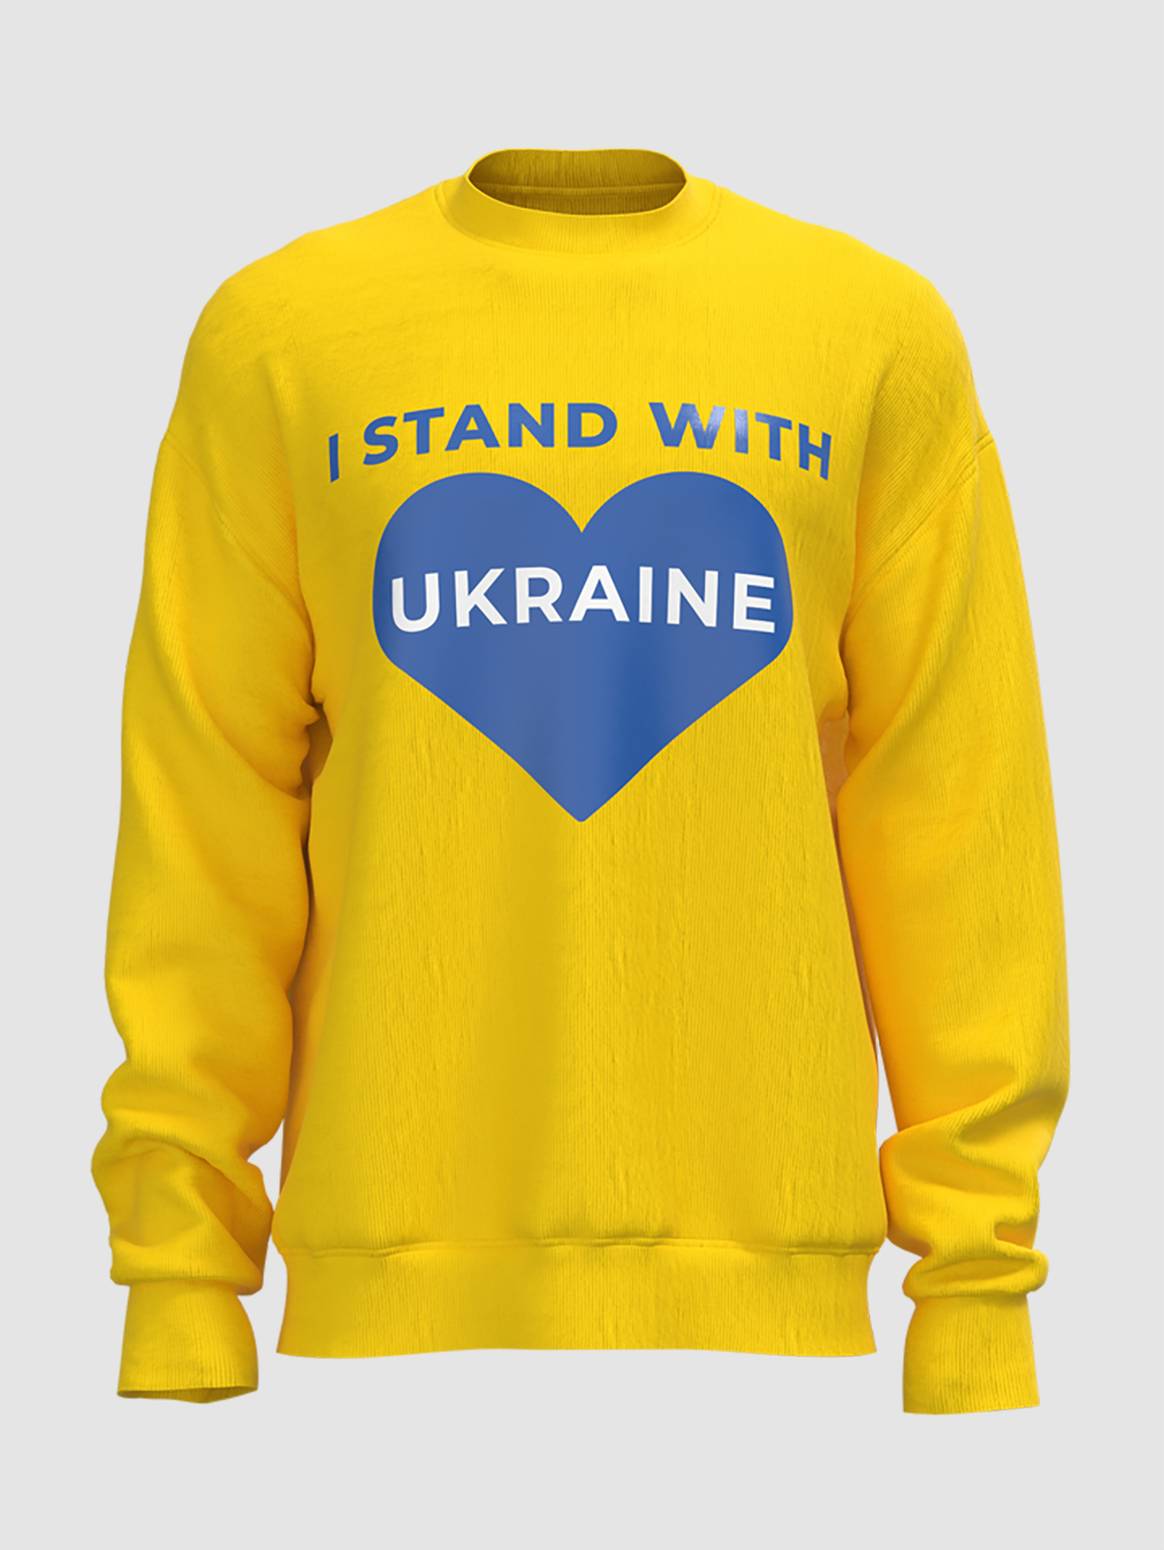 Photo Credits: Support Ukraine Collection, DressX.